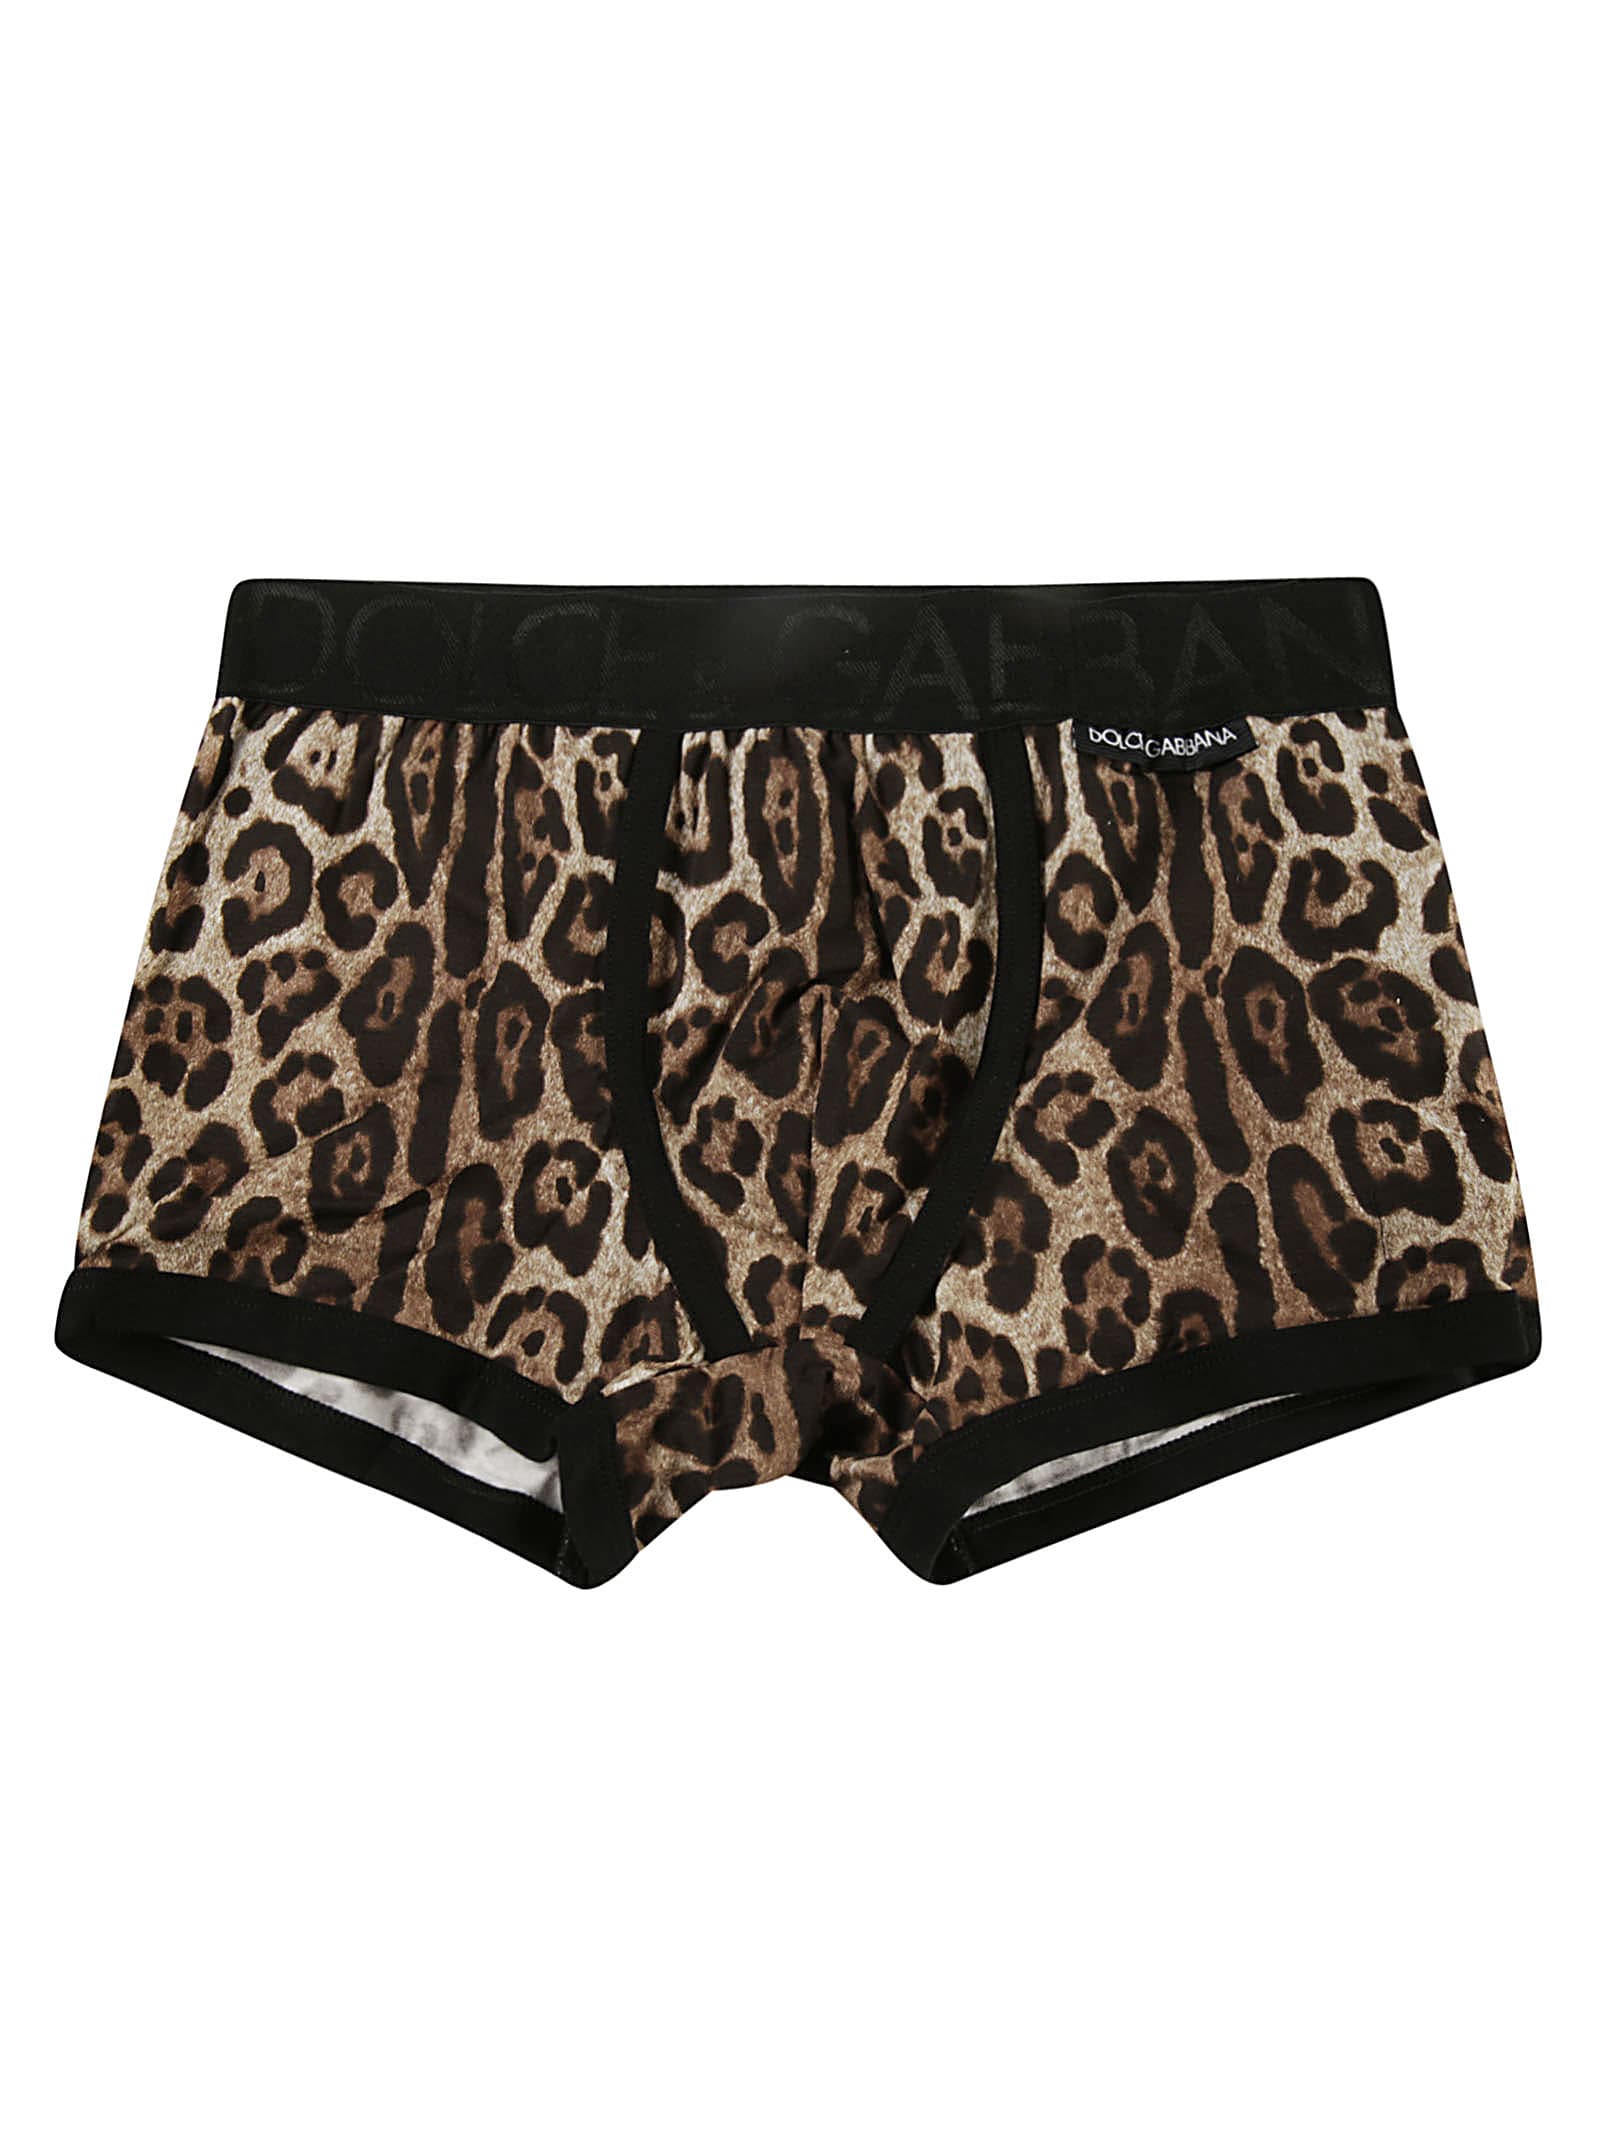 Dolce & Gabbana Leopard Print Boxer Shorts